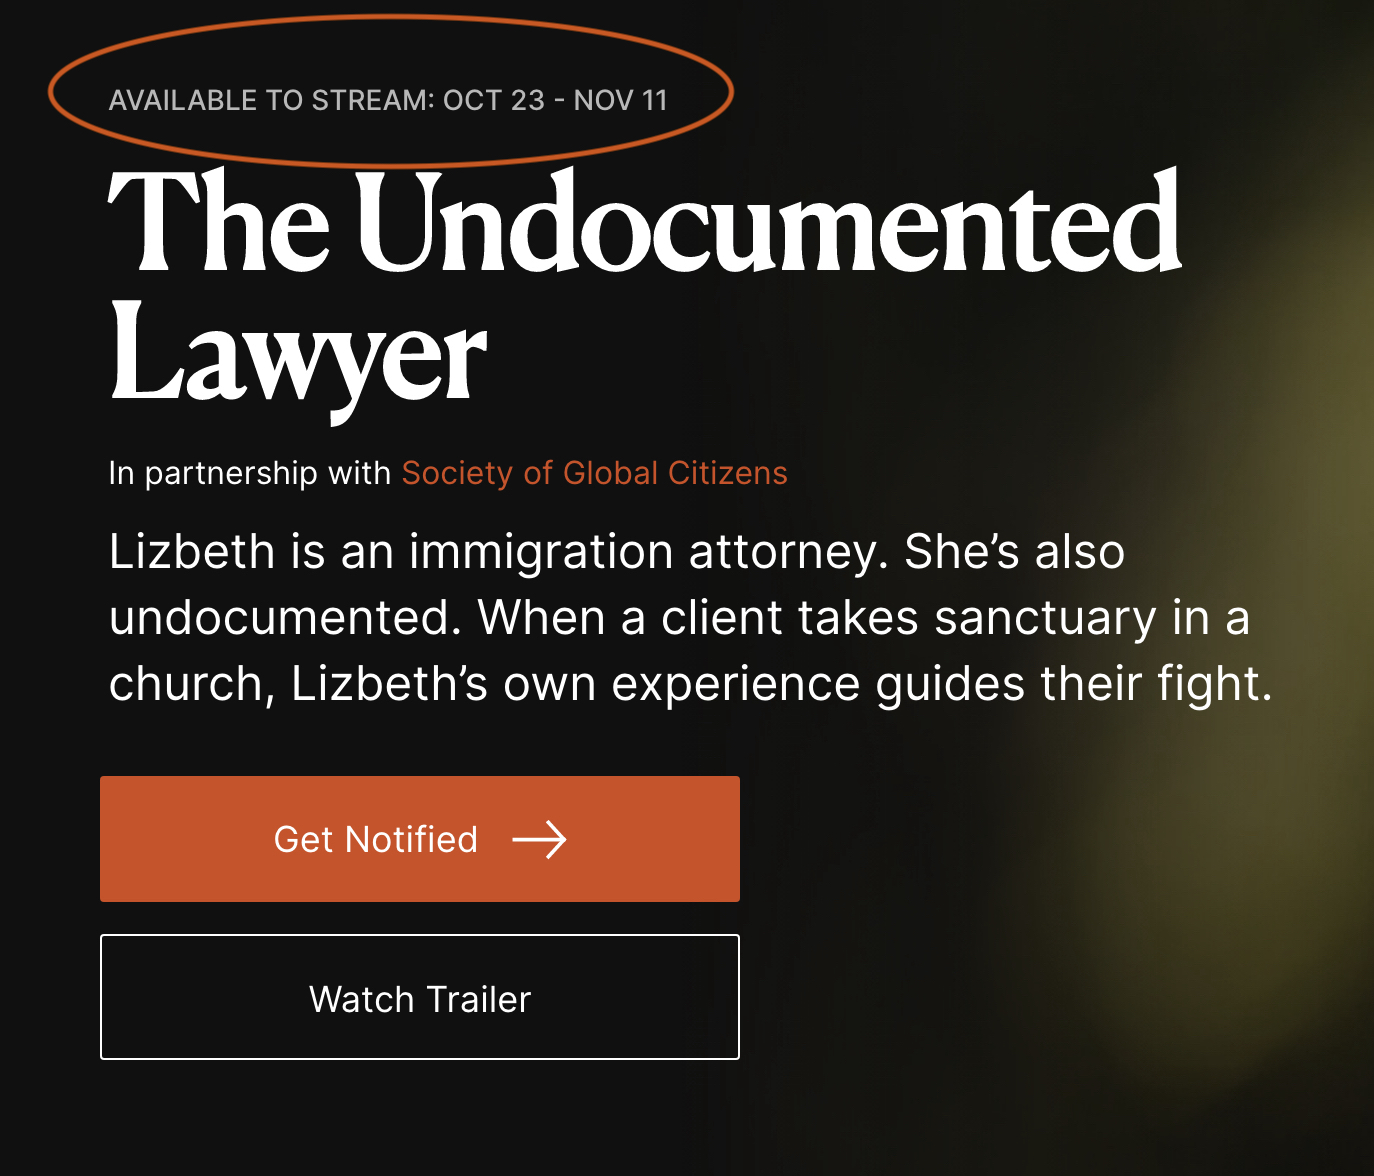 The_Undocumented_Lawyer_2020-10-16_20-17-41.jpeg